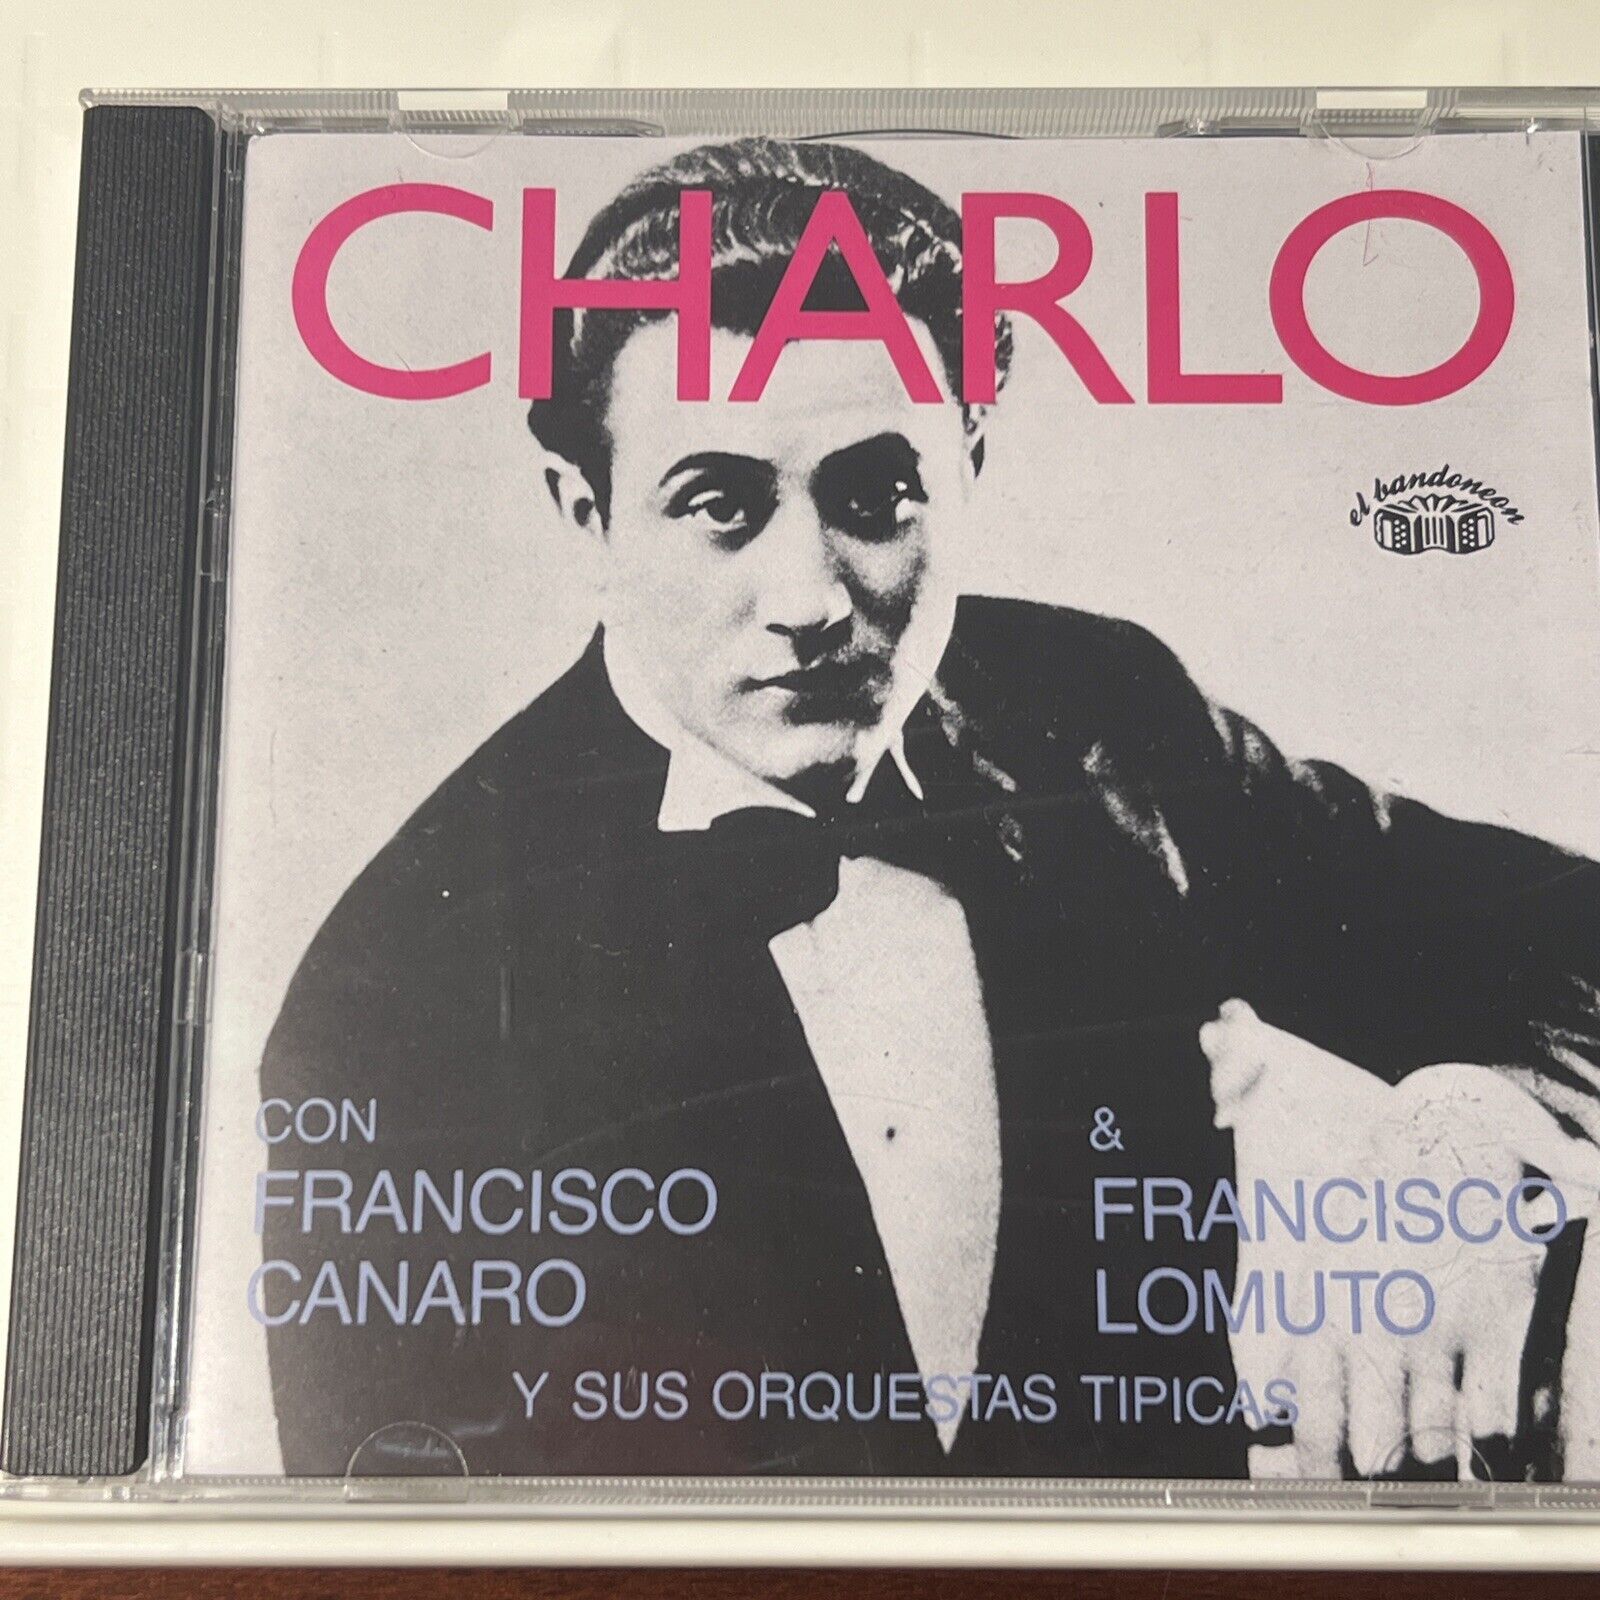 Charlo Con Francisco Canaro & Francisco Lomuto 1989 CD-DIGITAL AUDIO 18 Themes